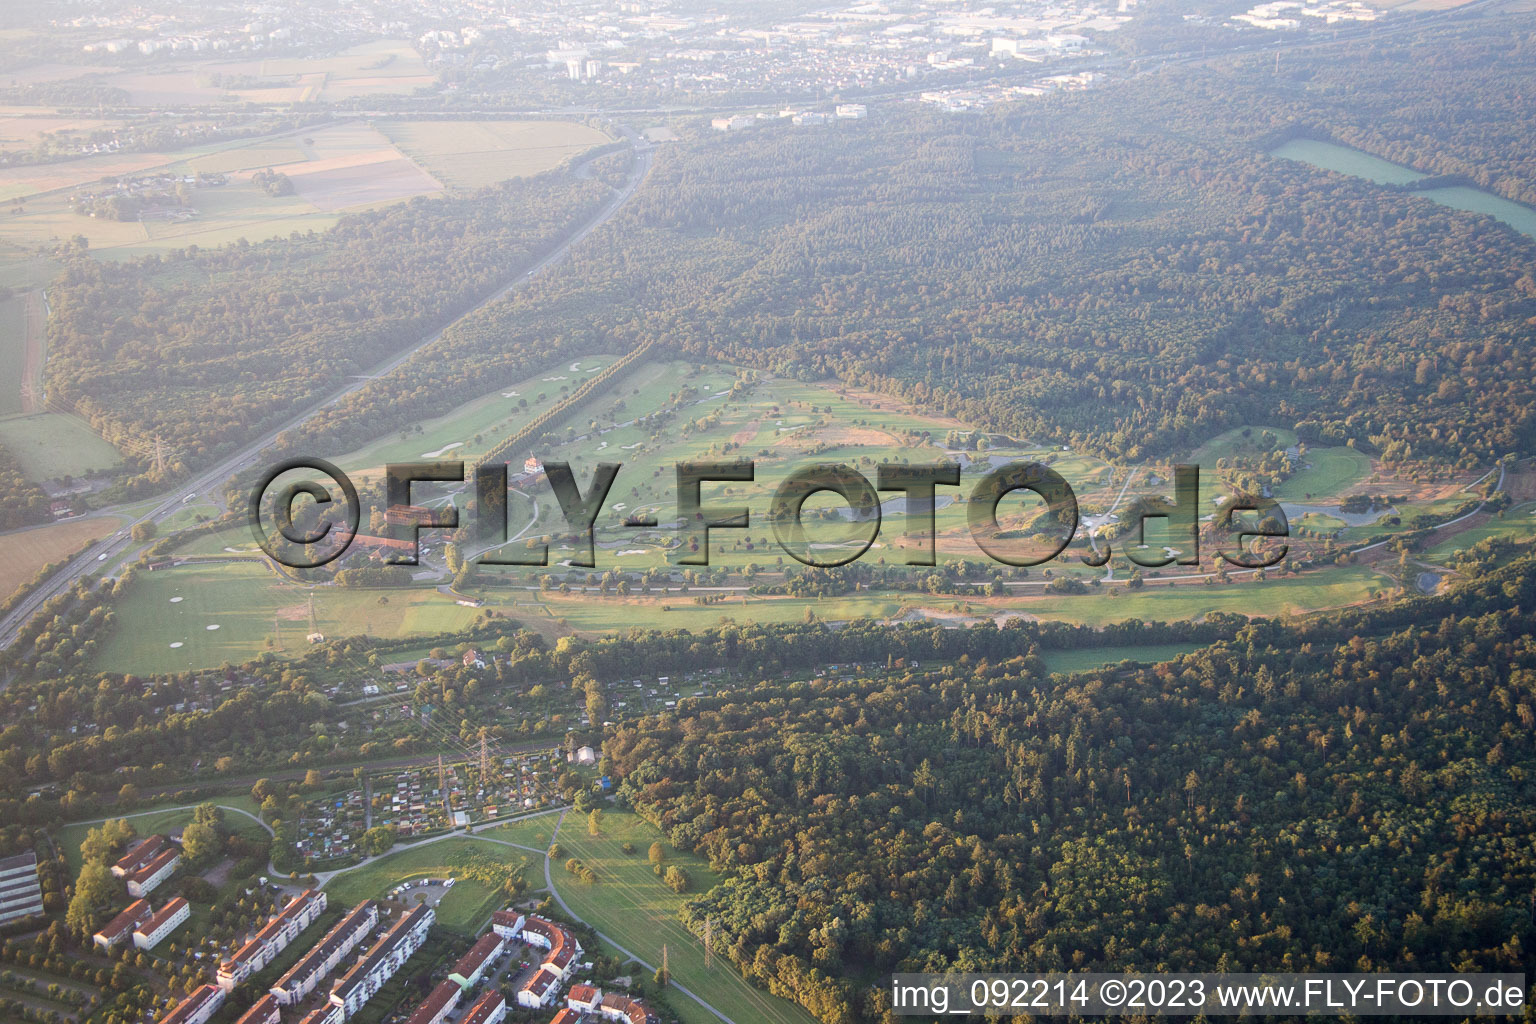 Aerial view of KA Golf Club Scheibenhardt in the district Beiertheim-Bulach in Karlsruhe in the state Baden-Wuerttemberg, Germany